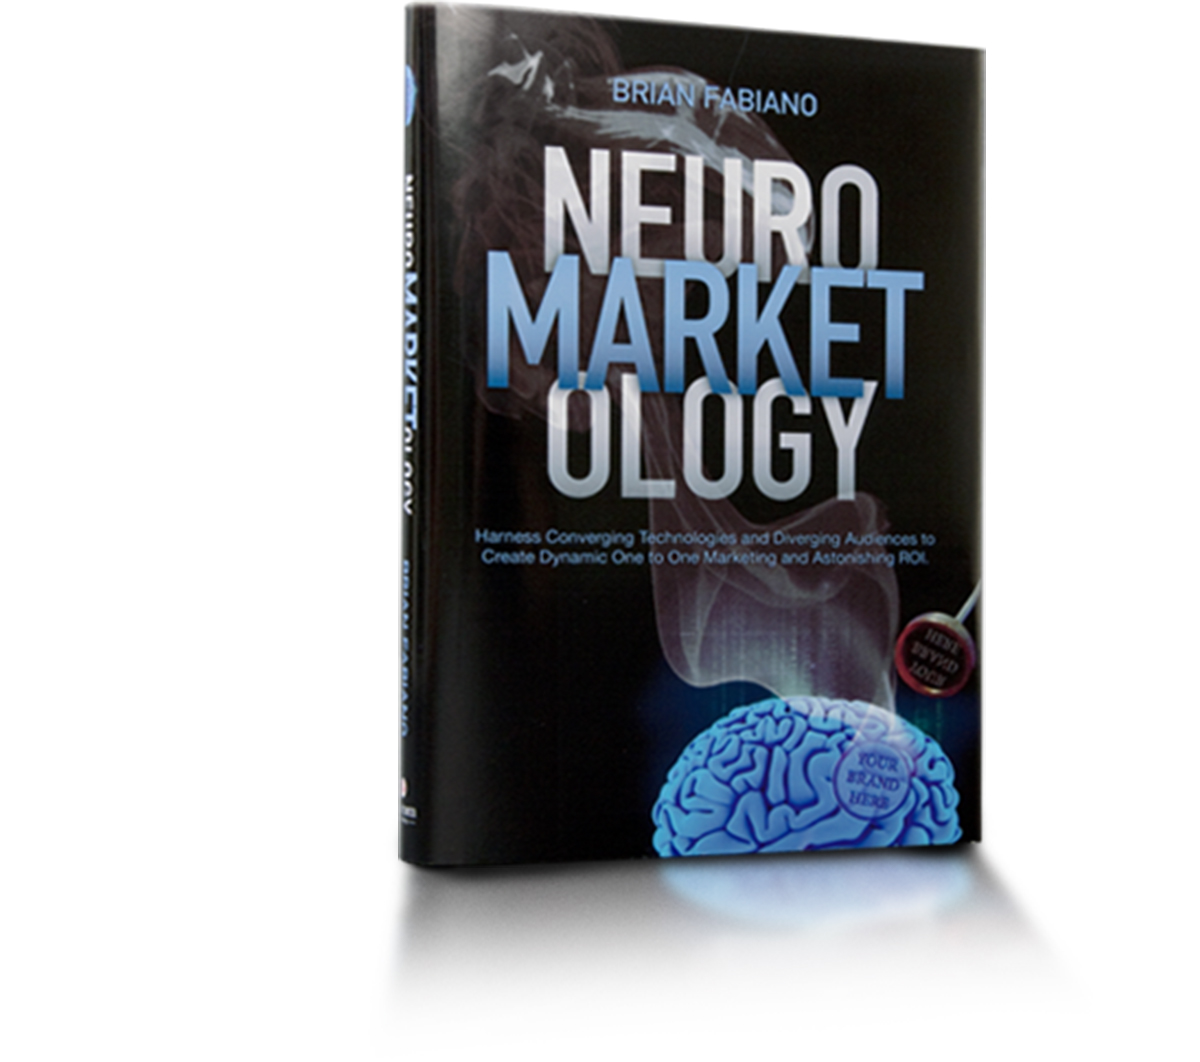 neuro marketology book release